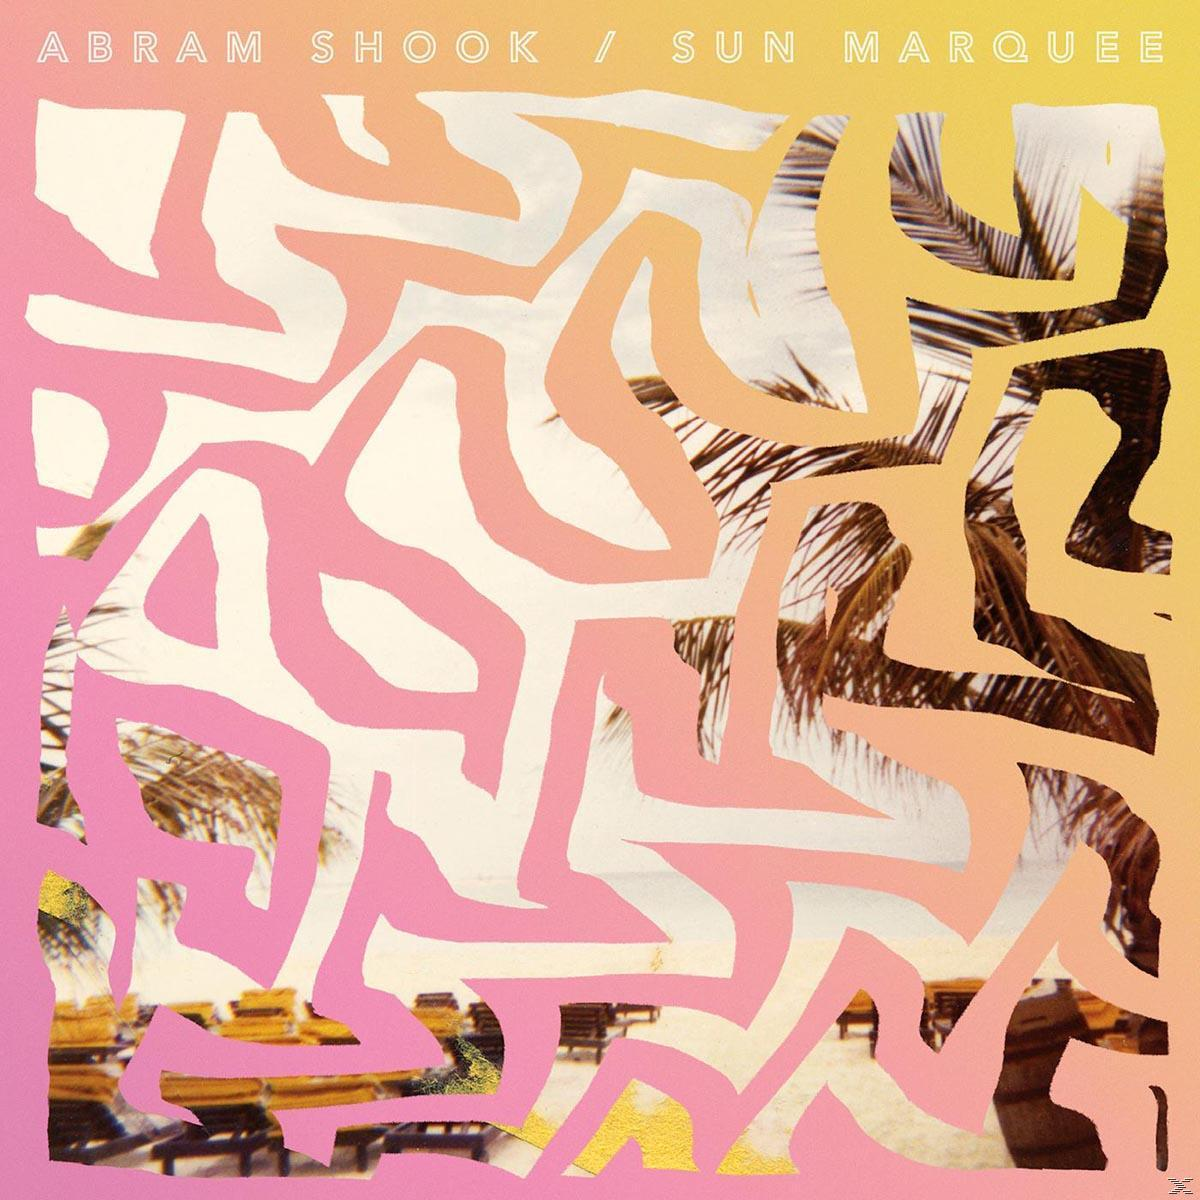 Sun Marquee Shook - (CD) Abram -